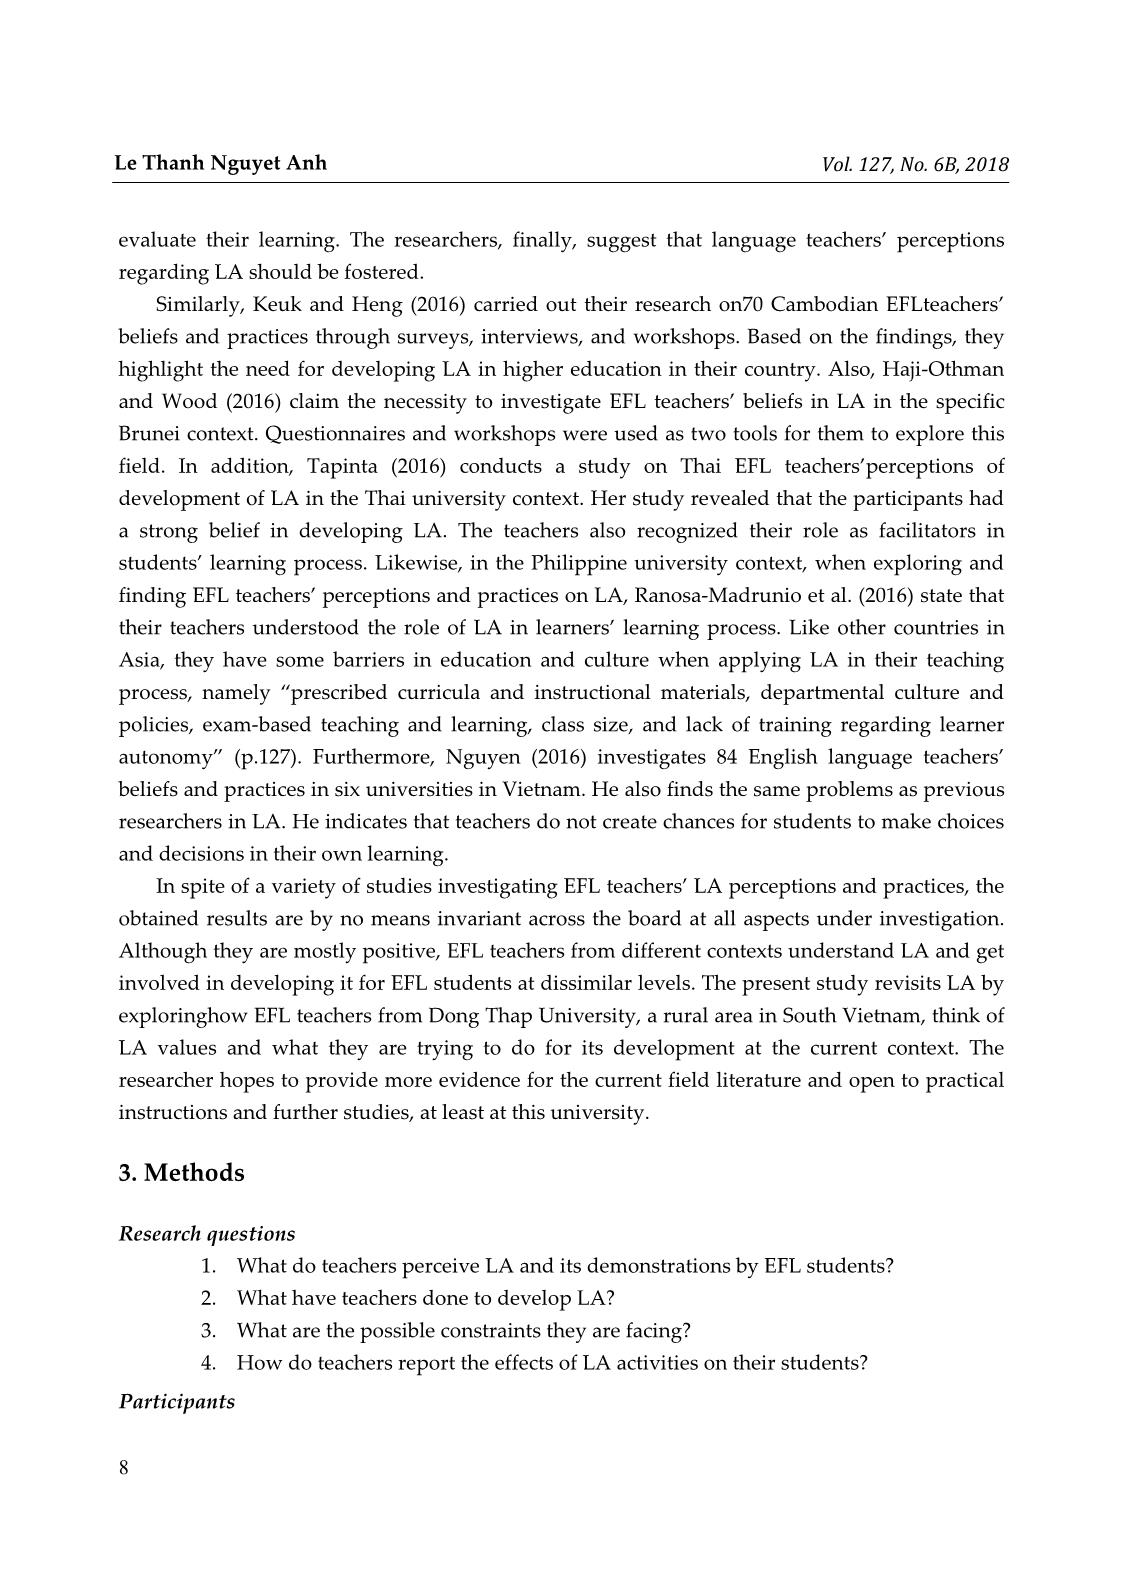 EFL teachers’ perceptions and practices regarding learner autonomy at Dong Thap University, Vietnam trang 4